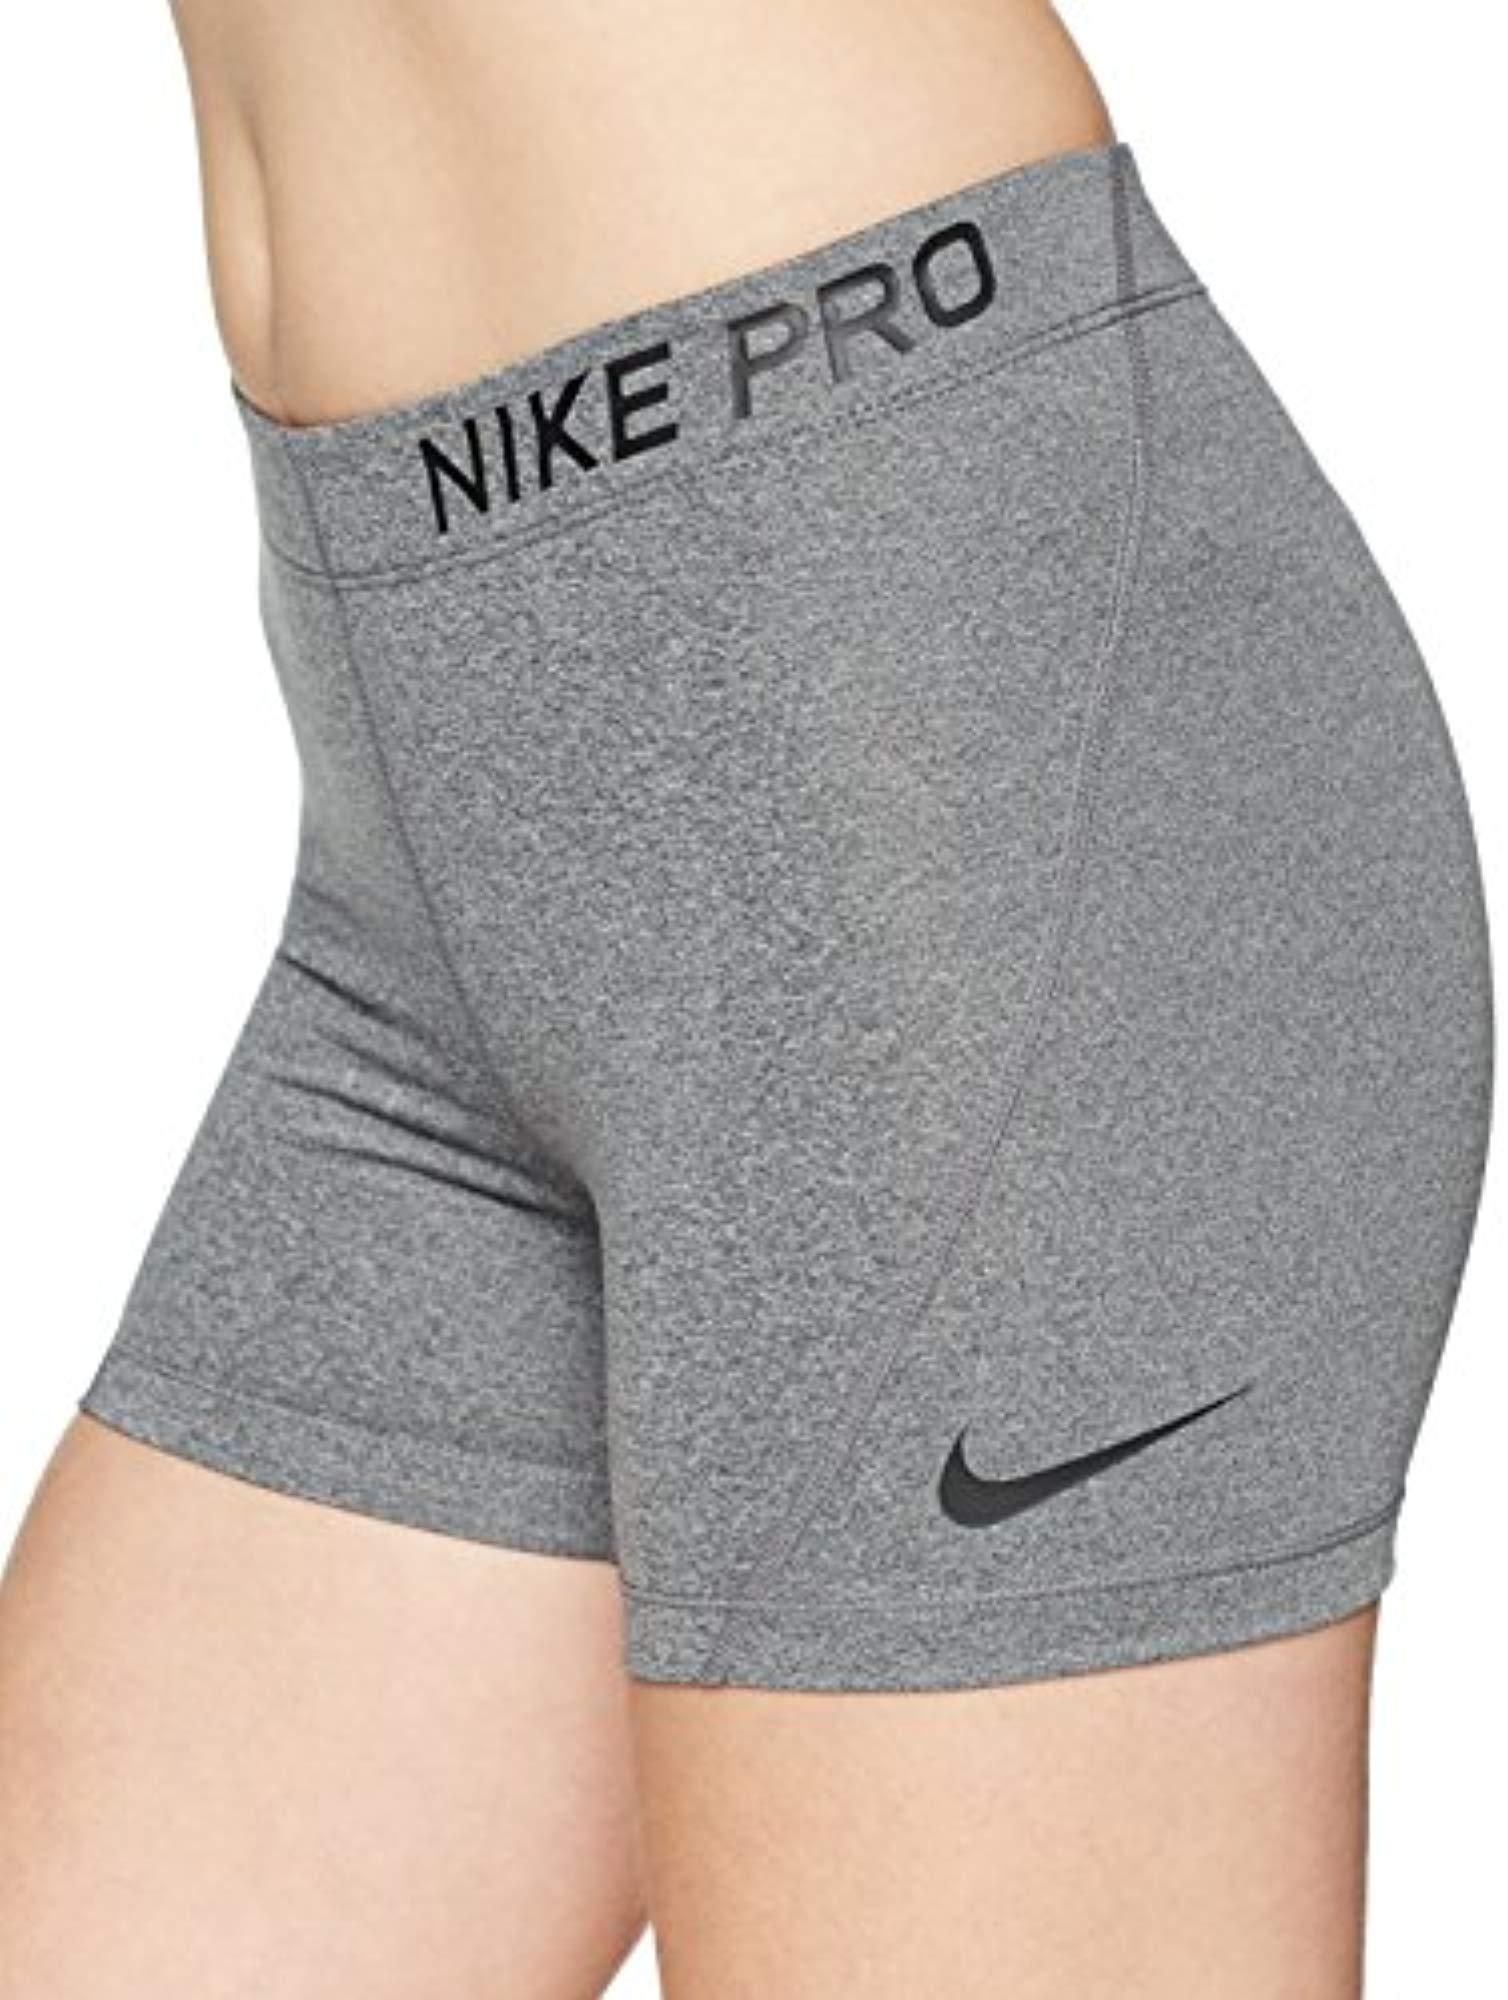 nike pro shorts gray